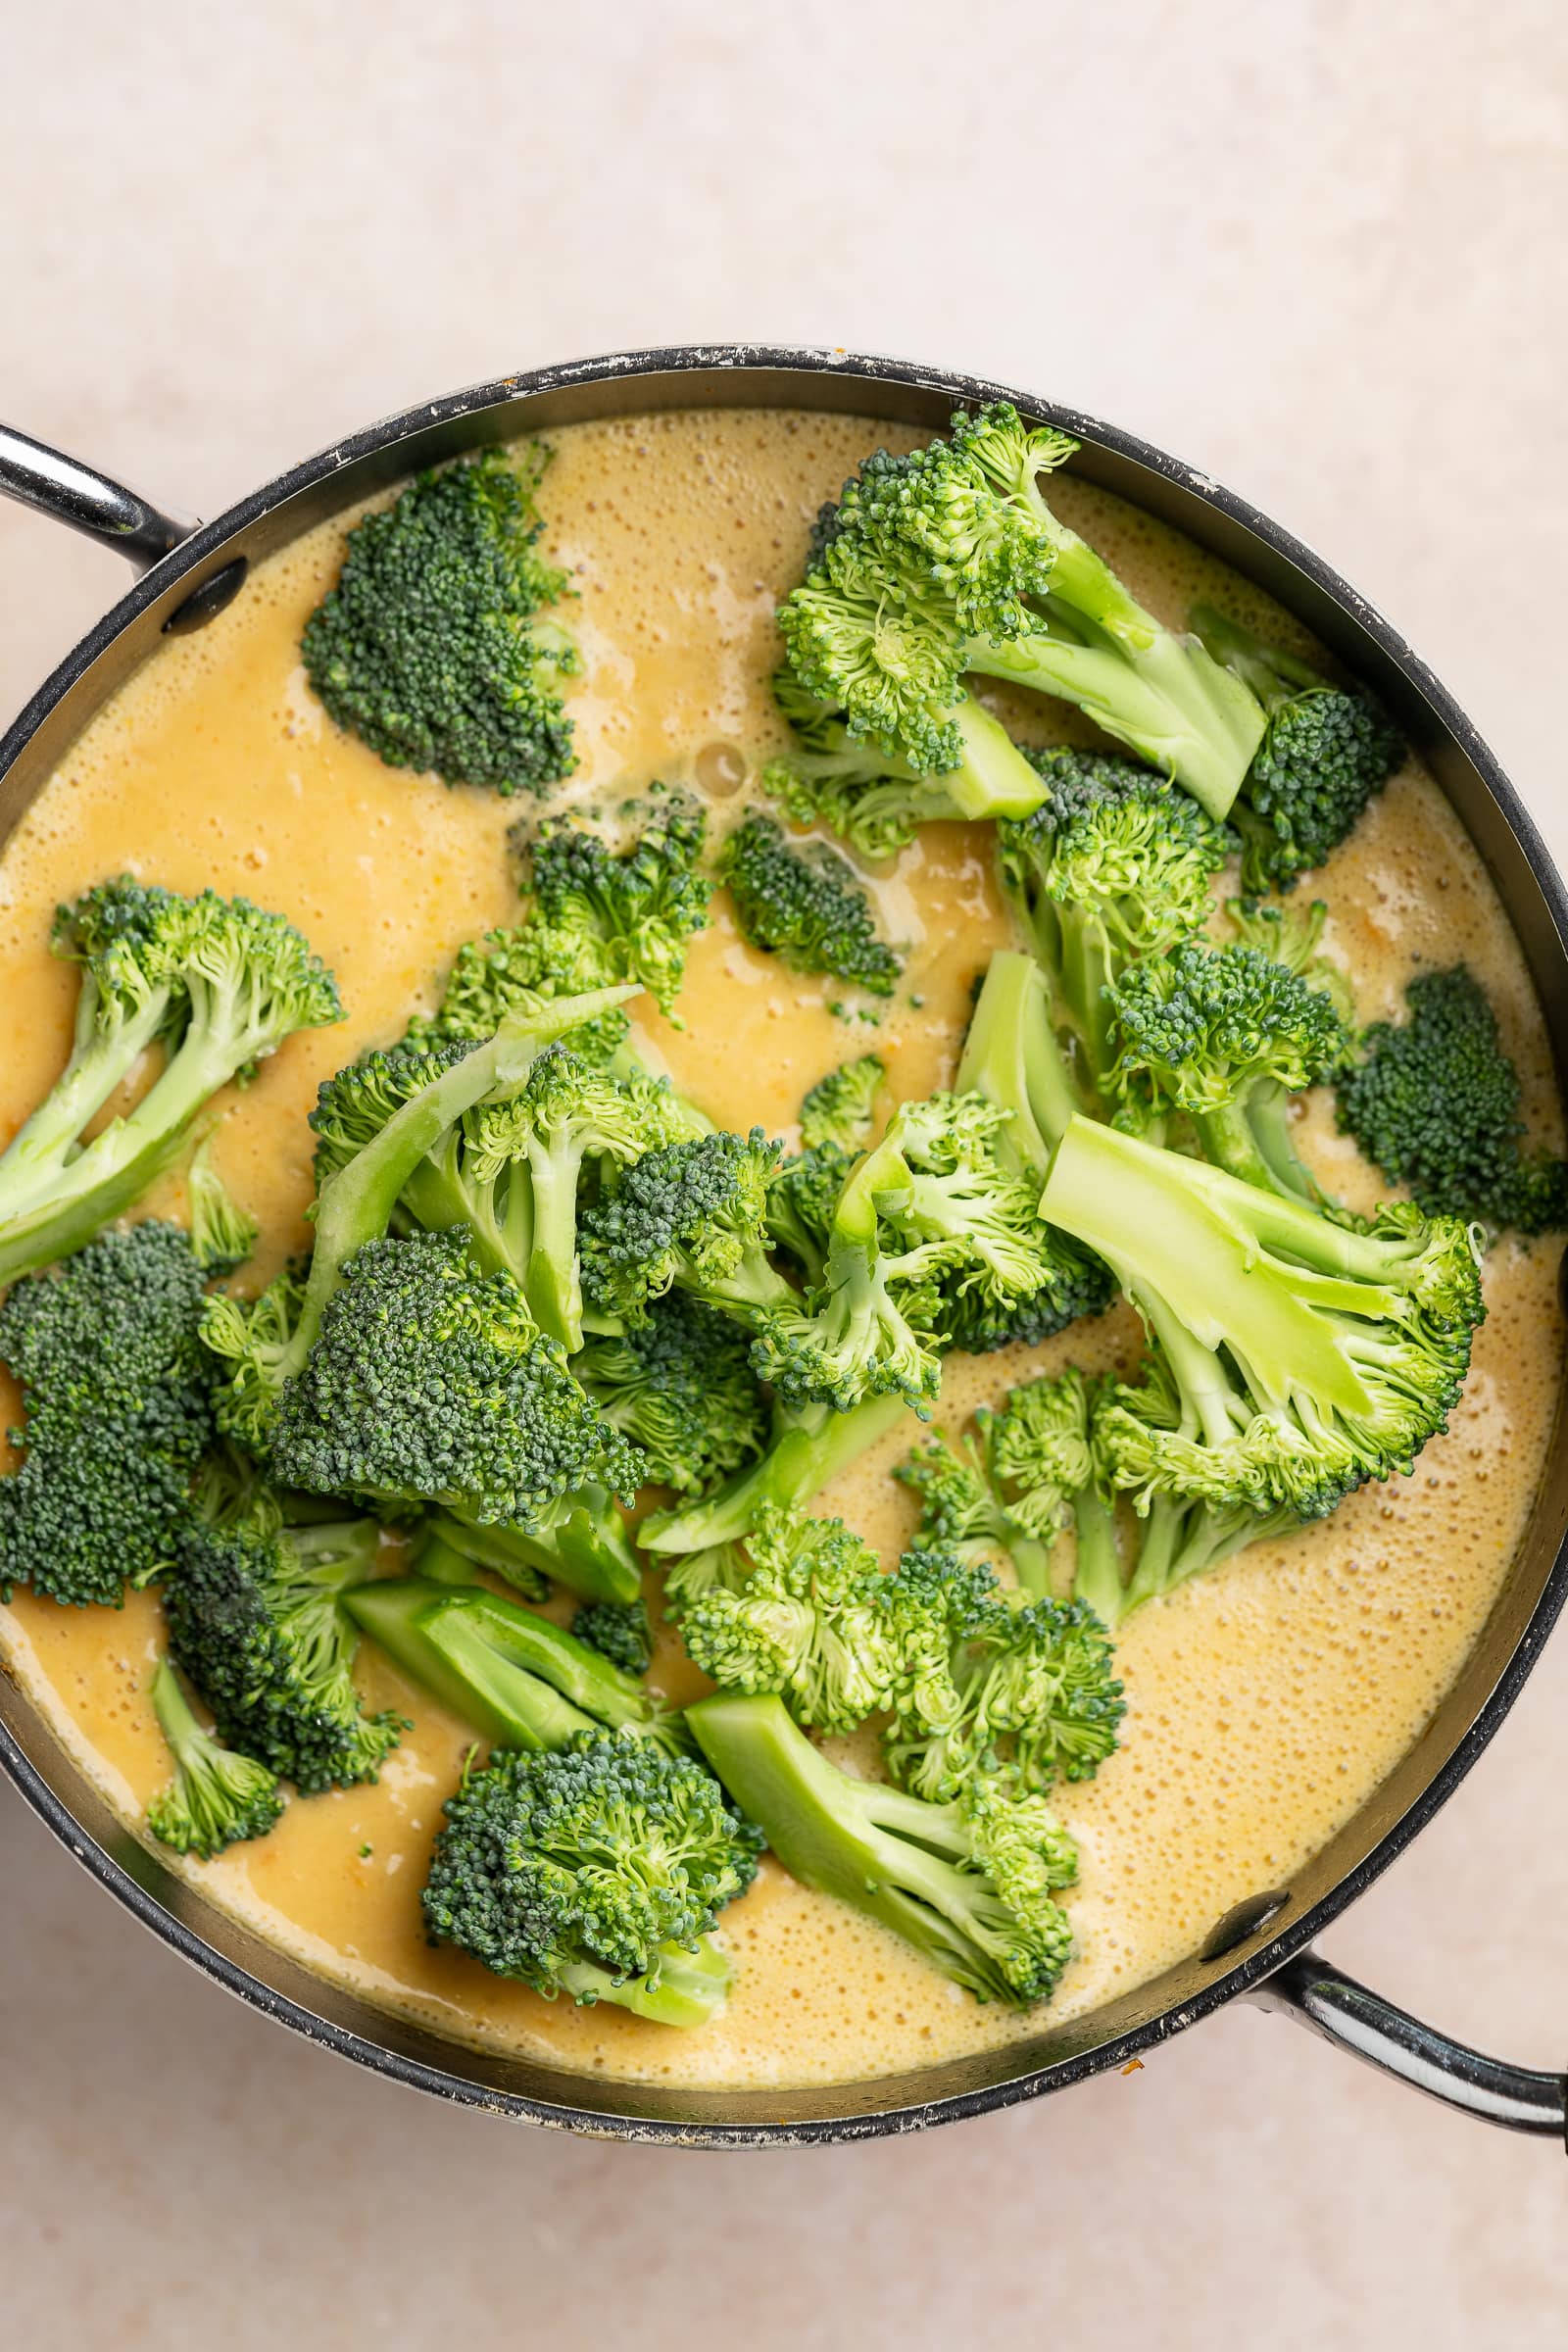 Broccoli added to soup pot.